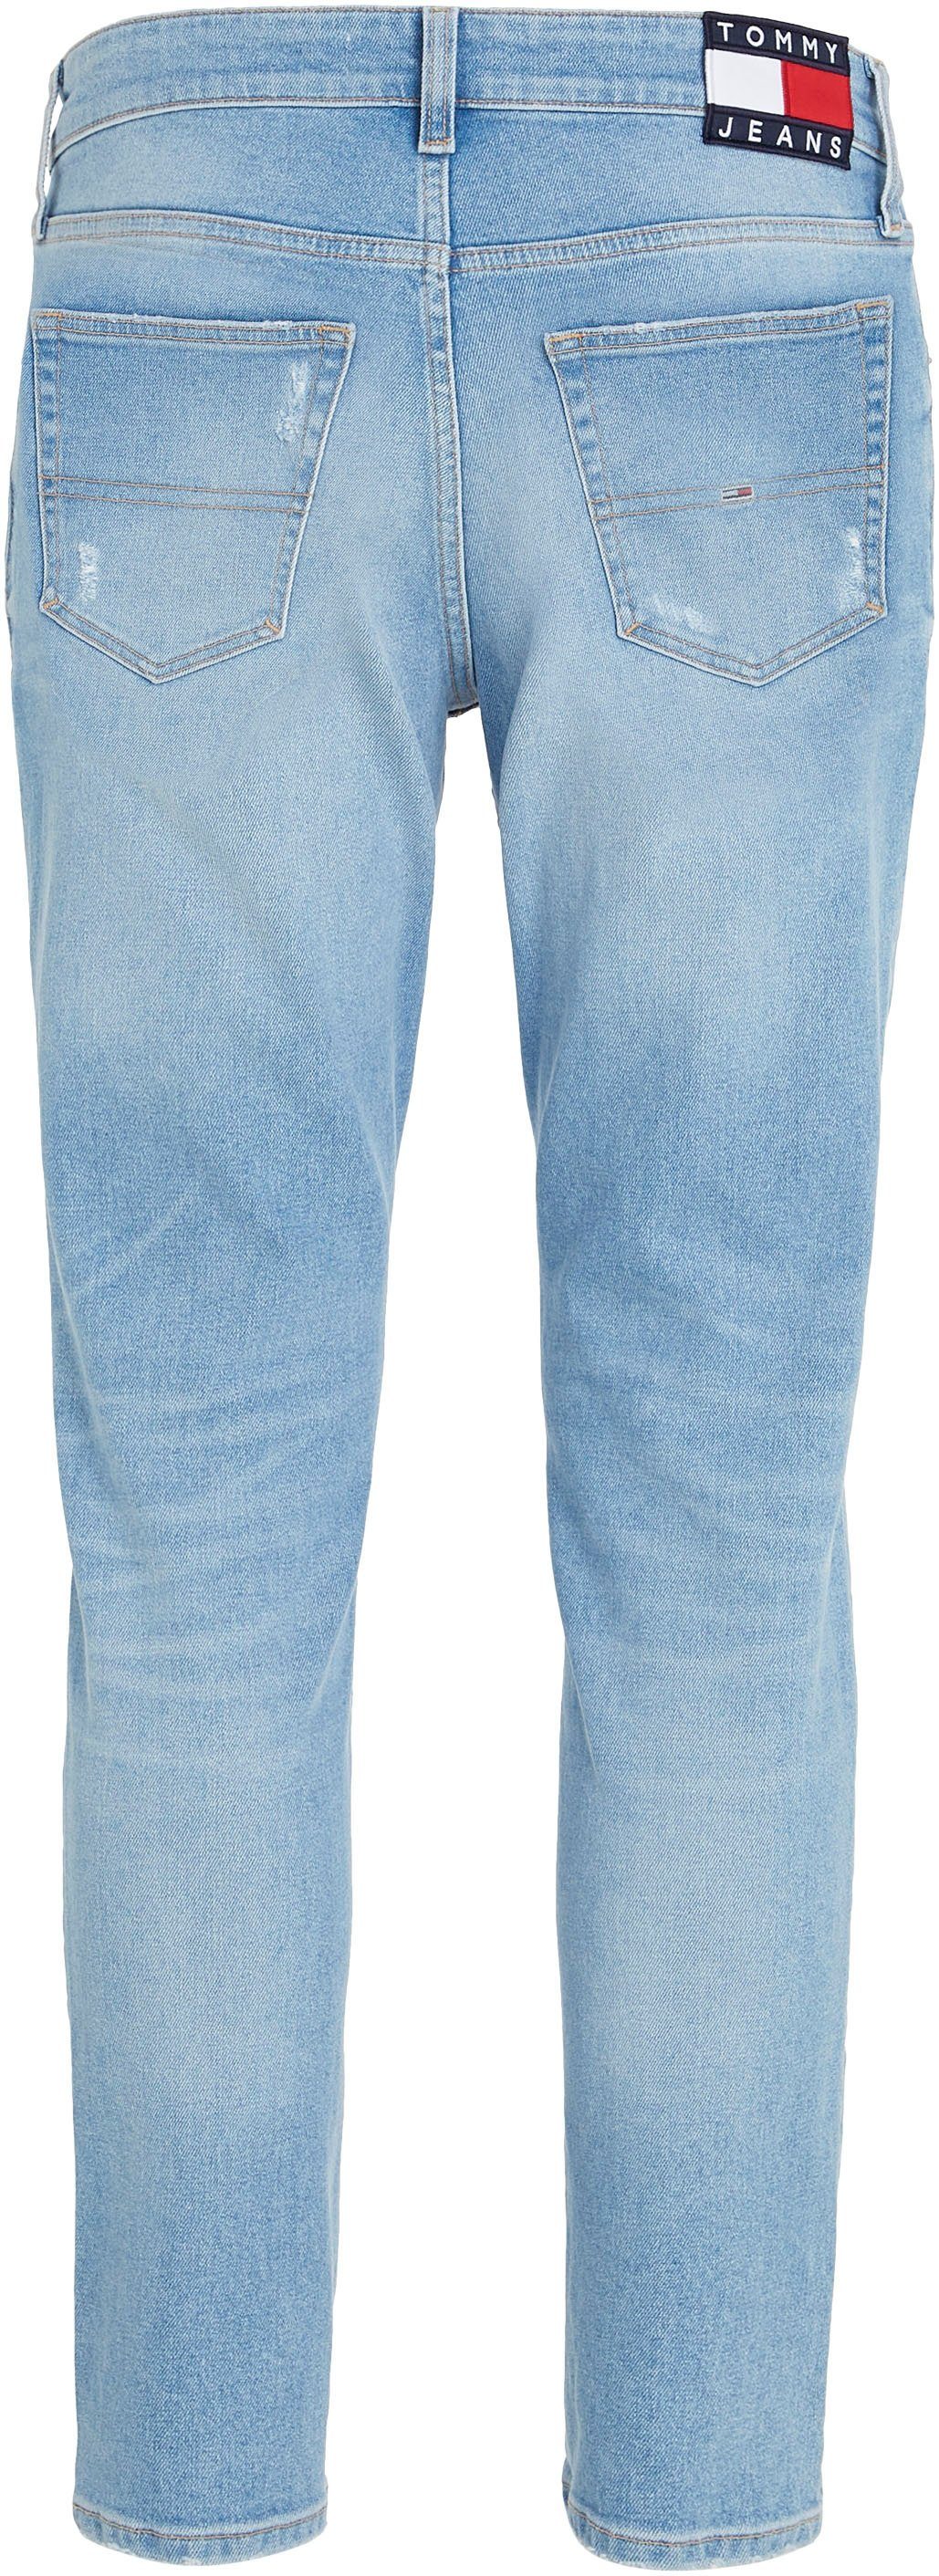 Markenlabel SLIM BG7114 TPRD Slim-fit-Jeans Tommy Jeans DenimLight mit AUSTIN